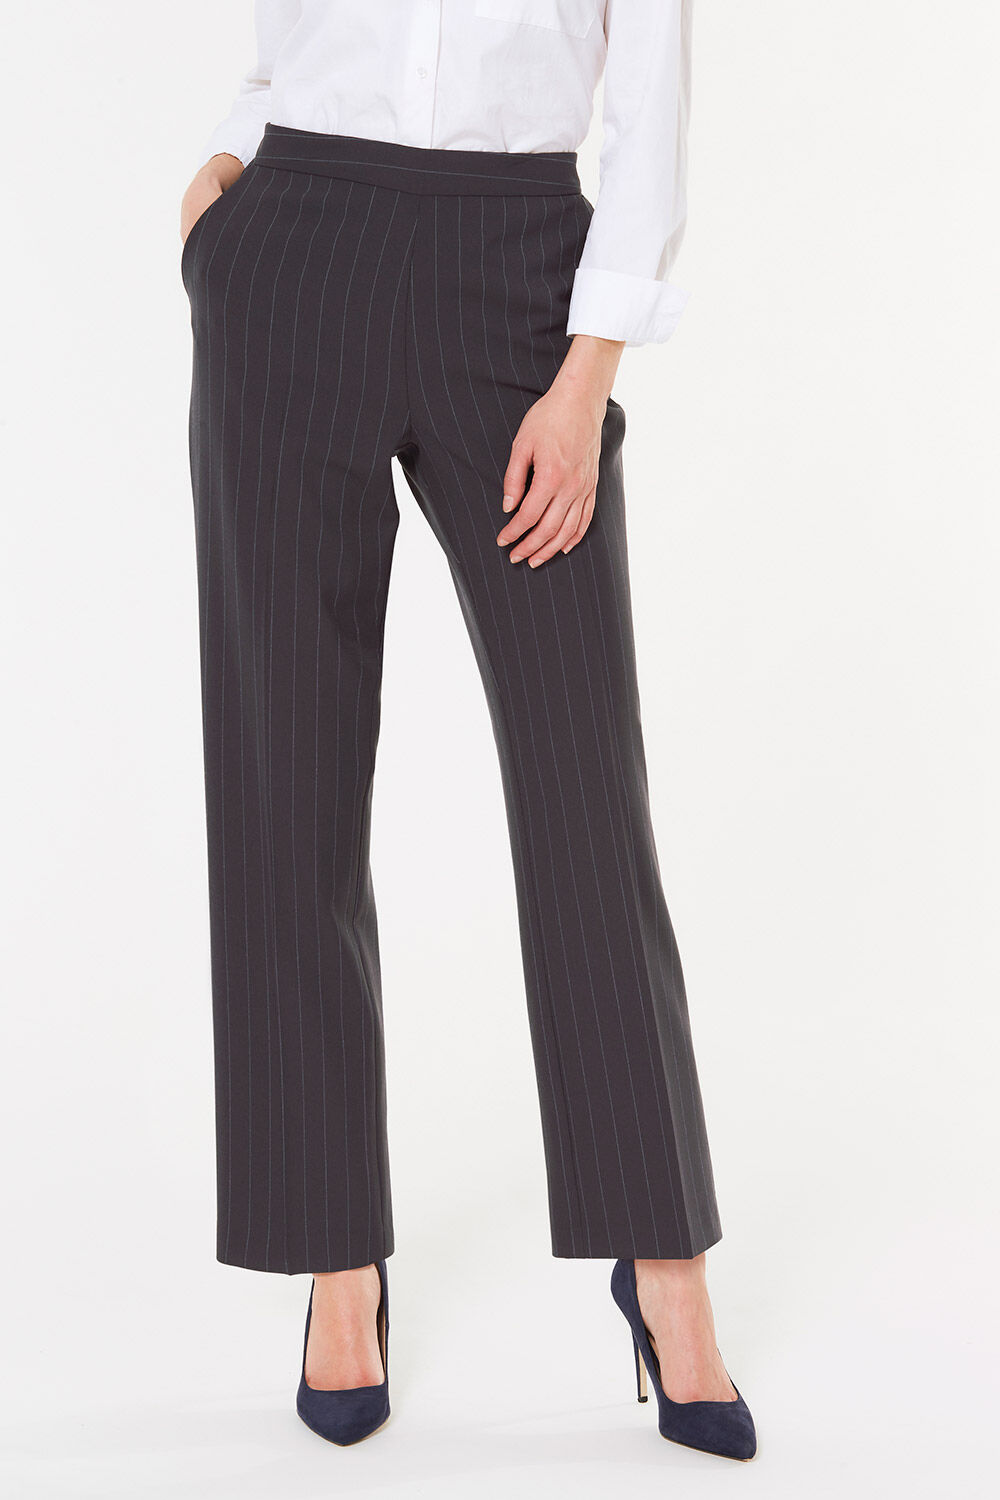 Bonmarche Workwear Classic Straight Leg Stripe Pull On Trouser - Navy, Size: 10